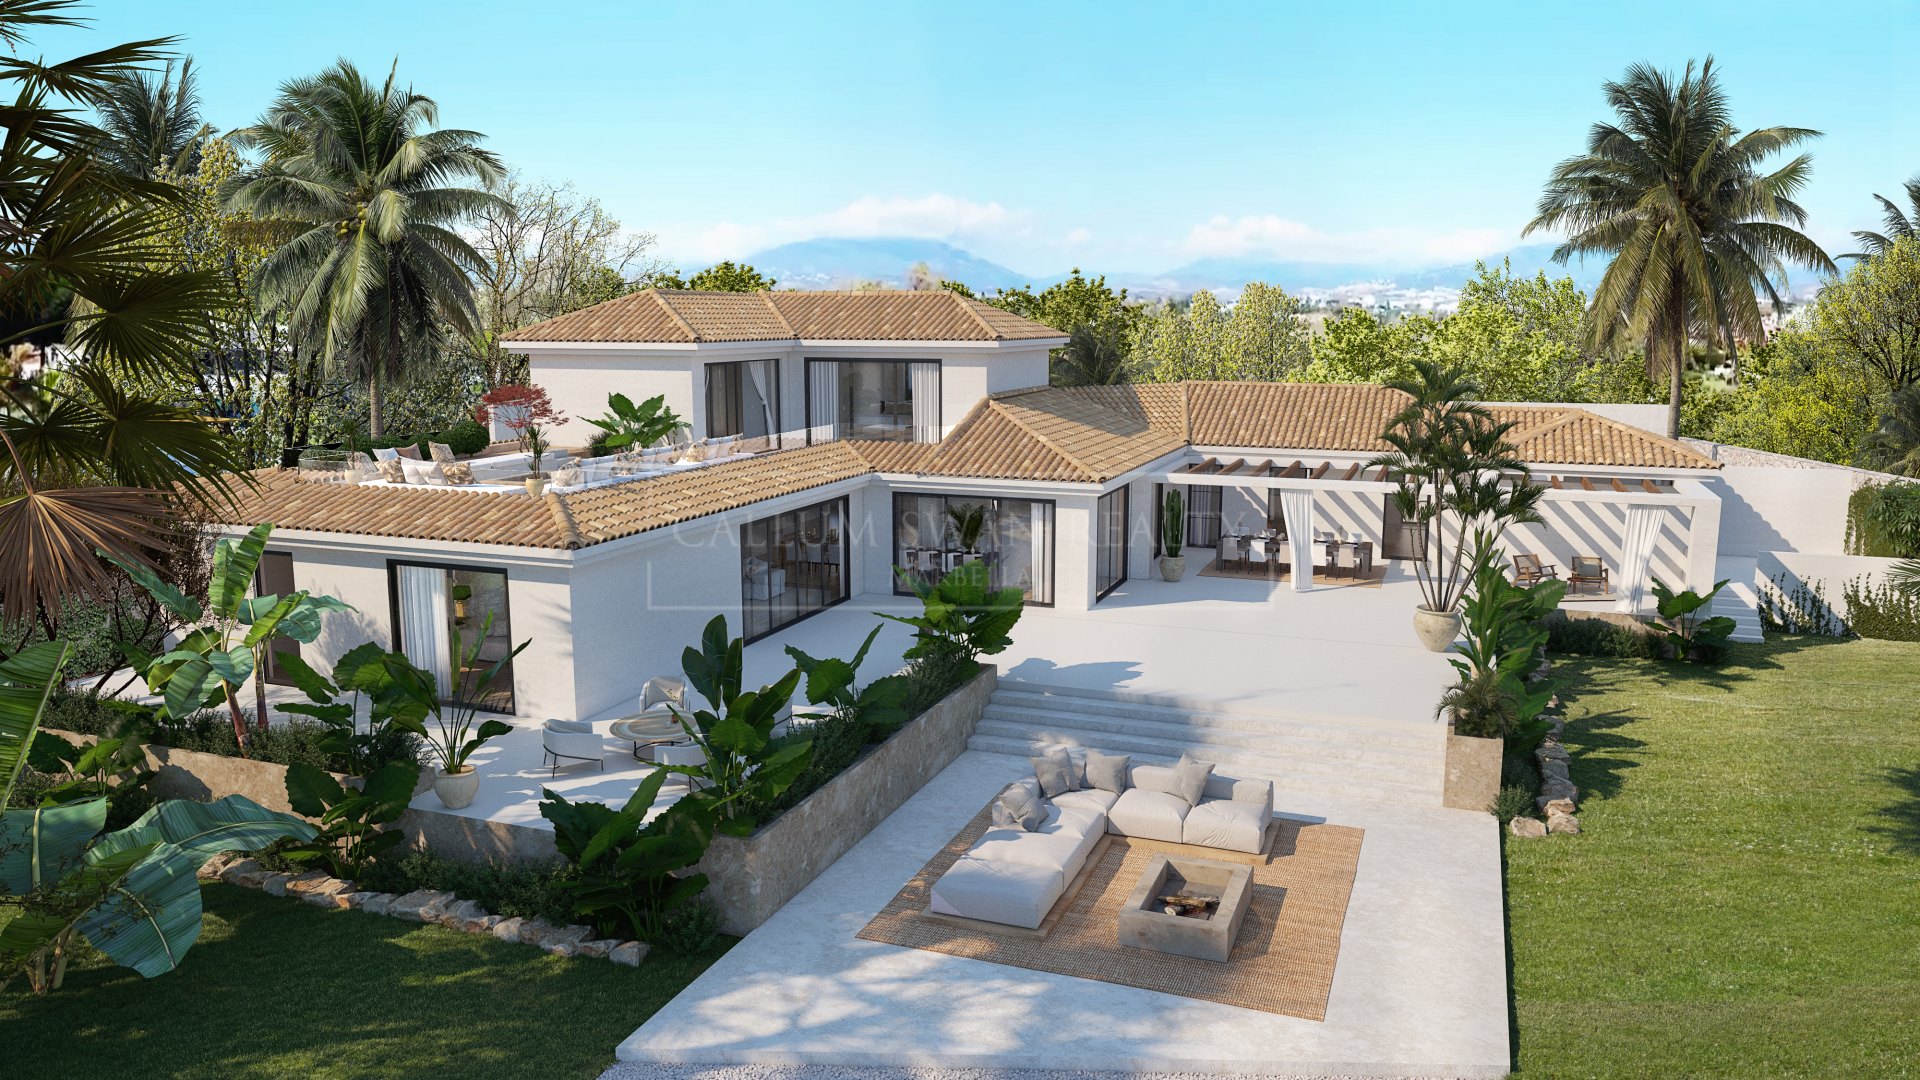 Luxury turnkey villa Project in Casasola